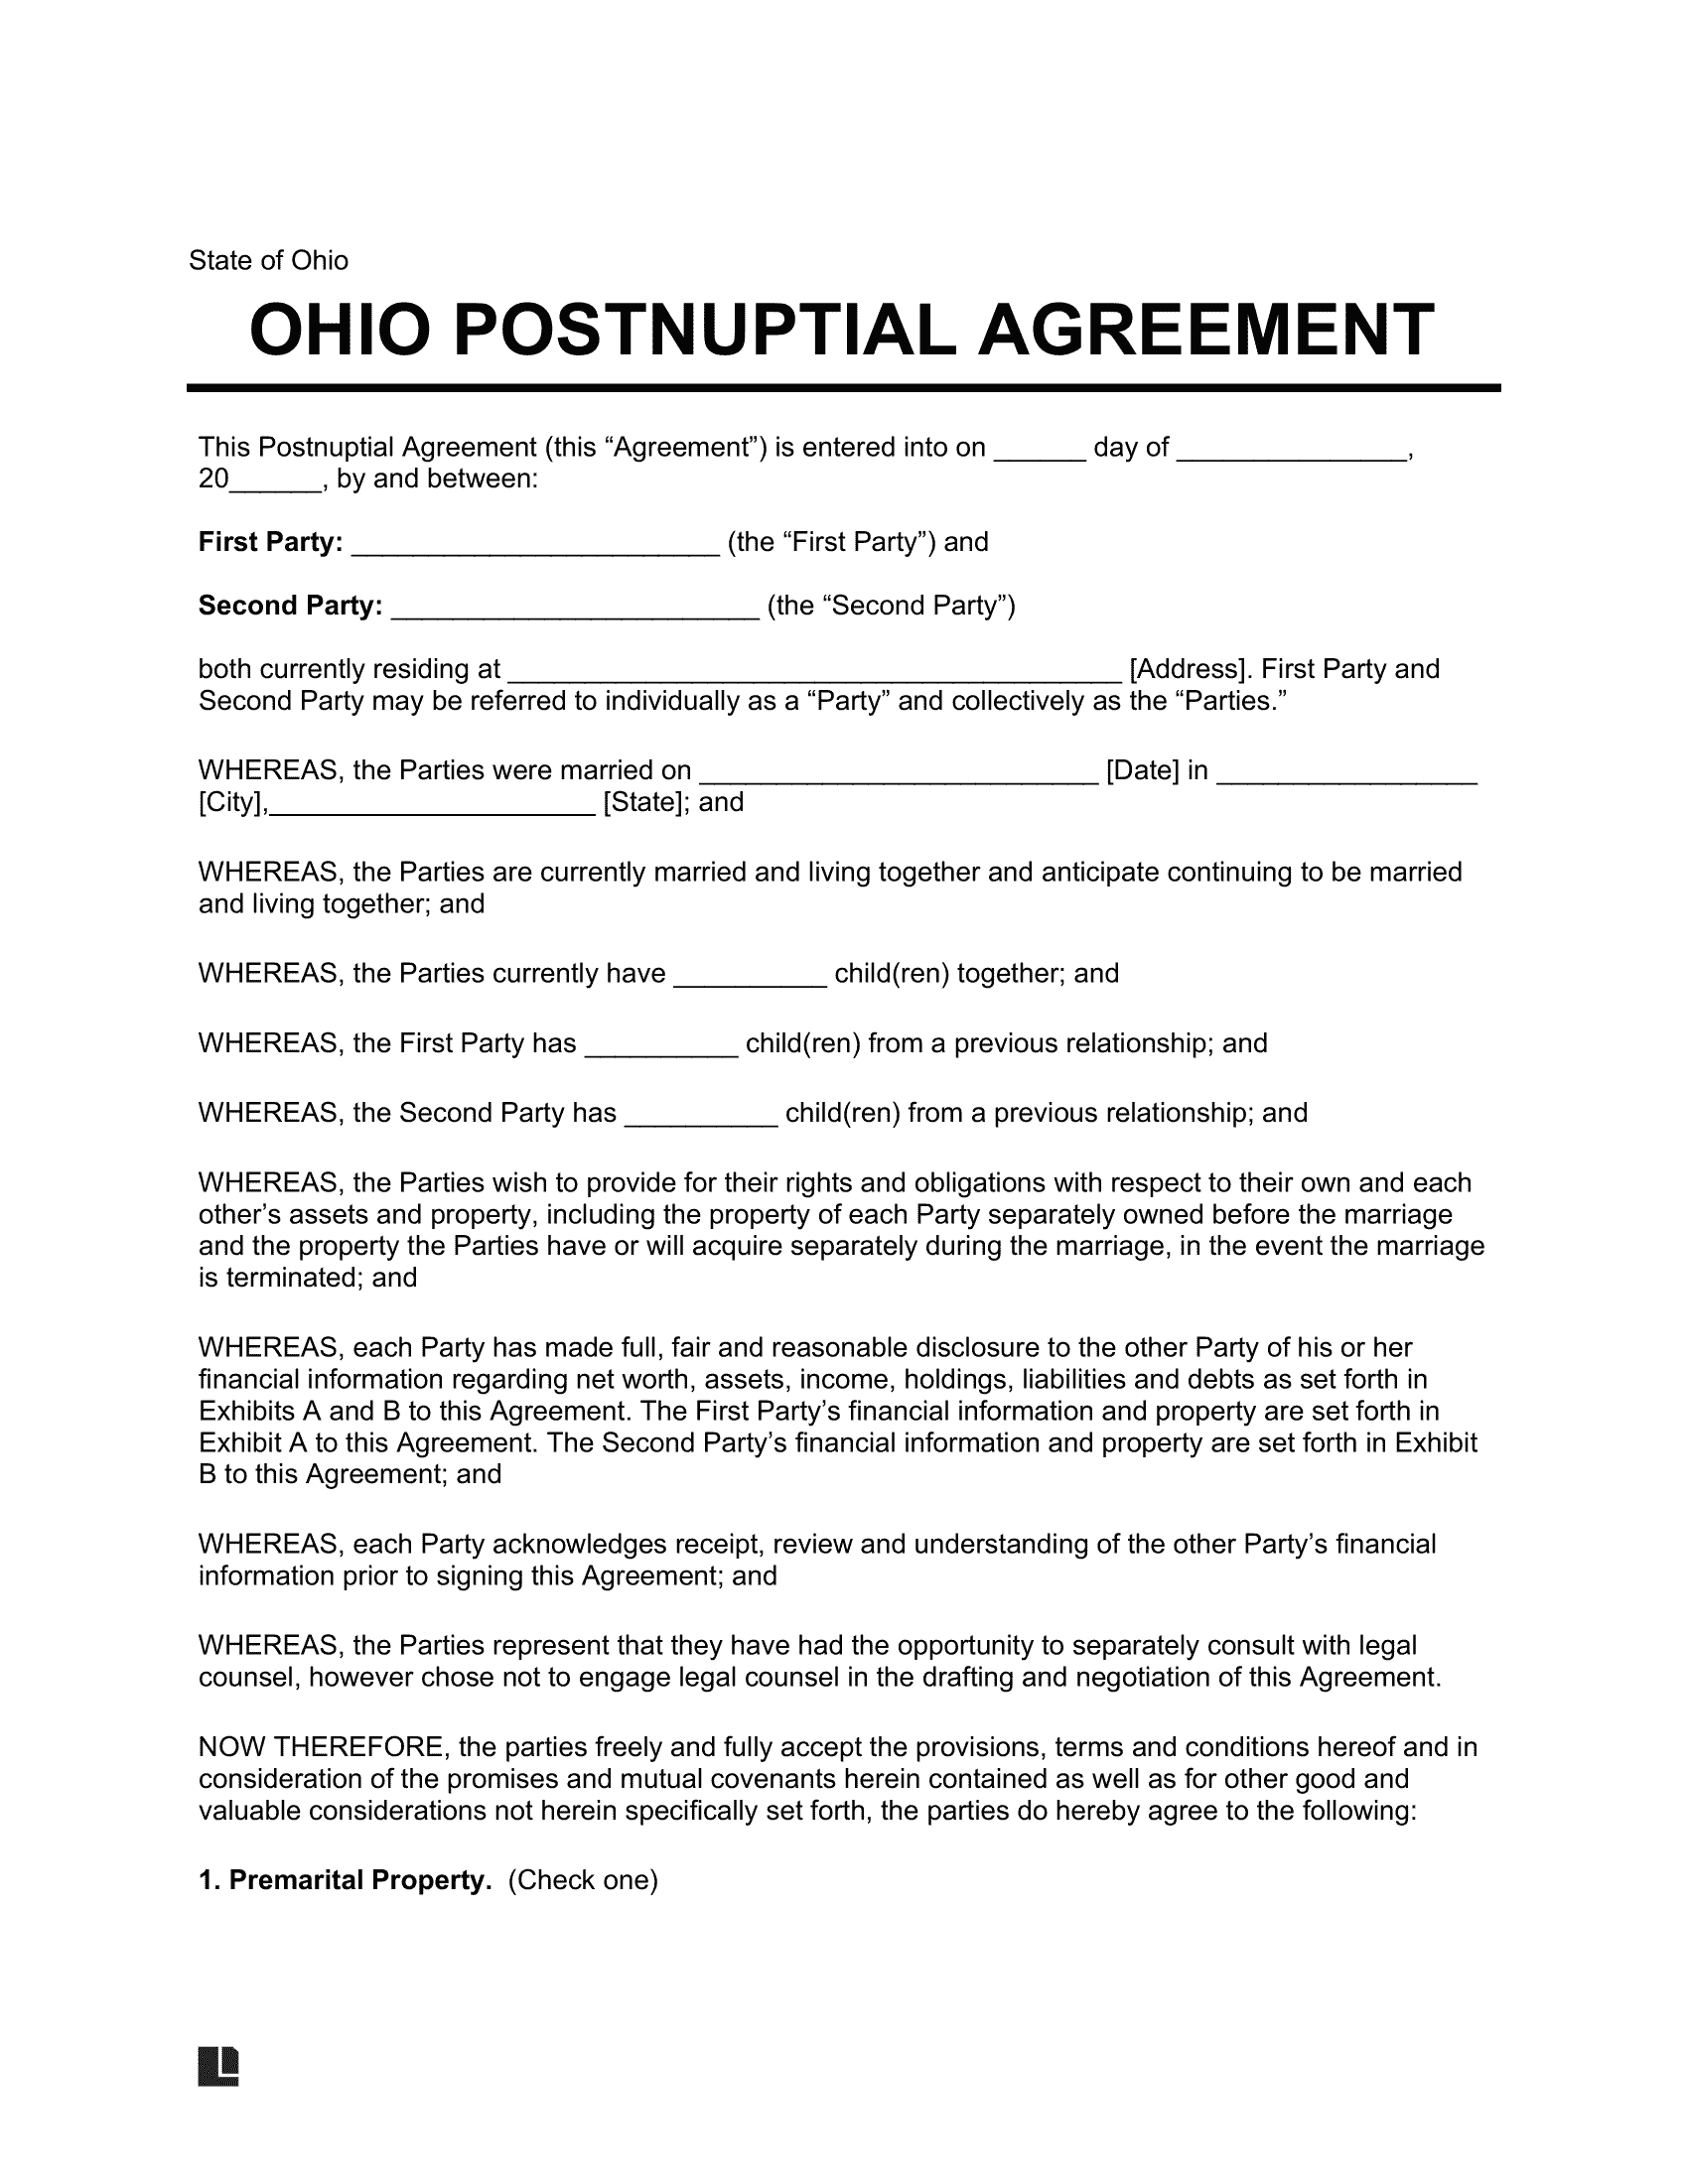 Ohio Postnuptial Agreement Template